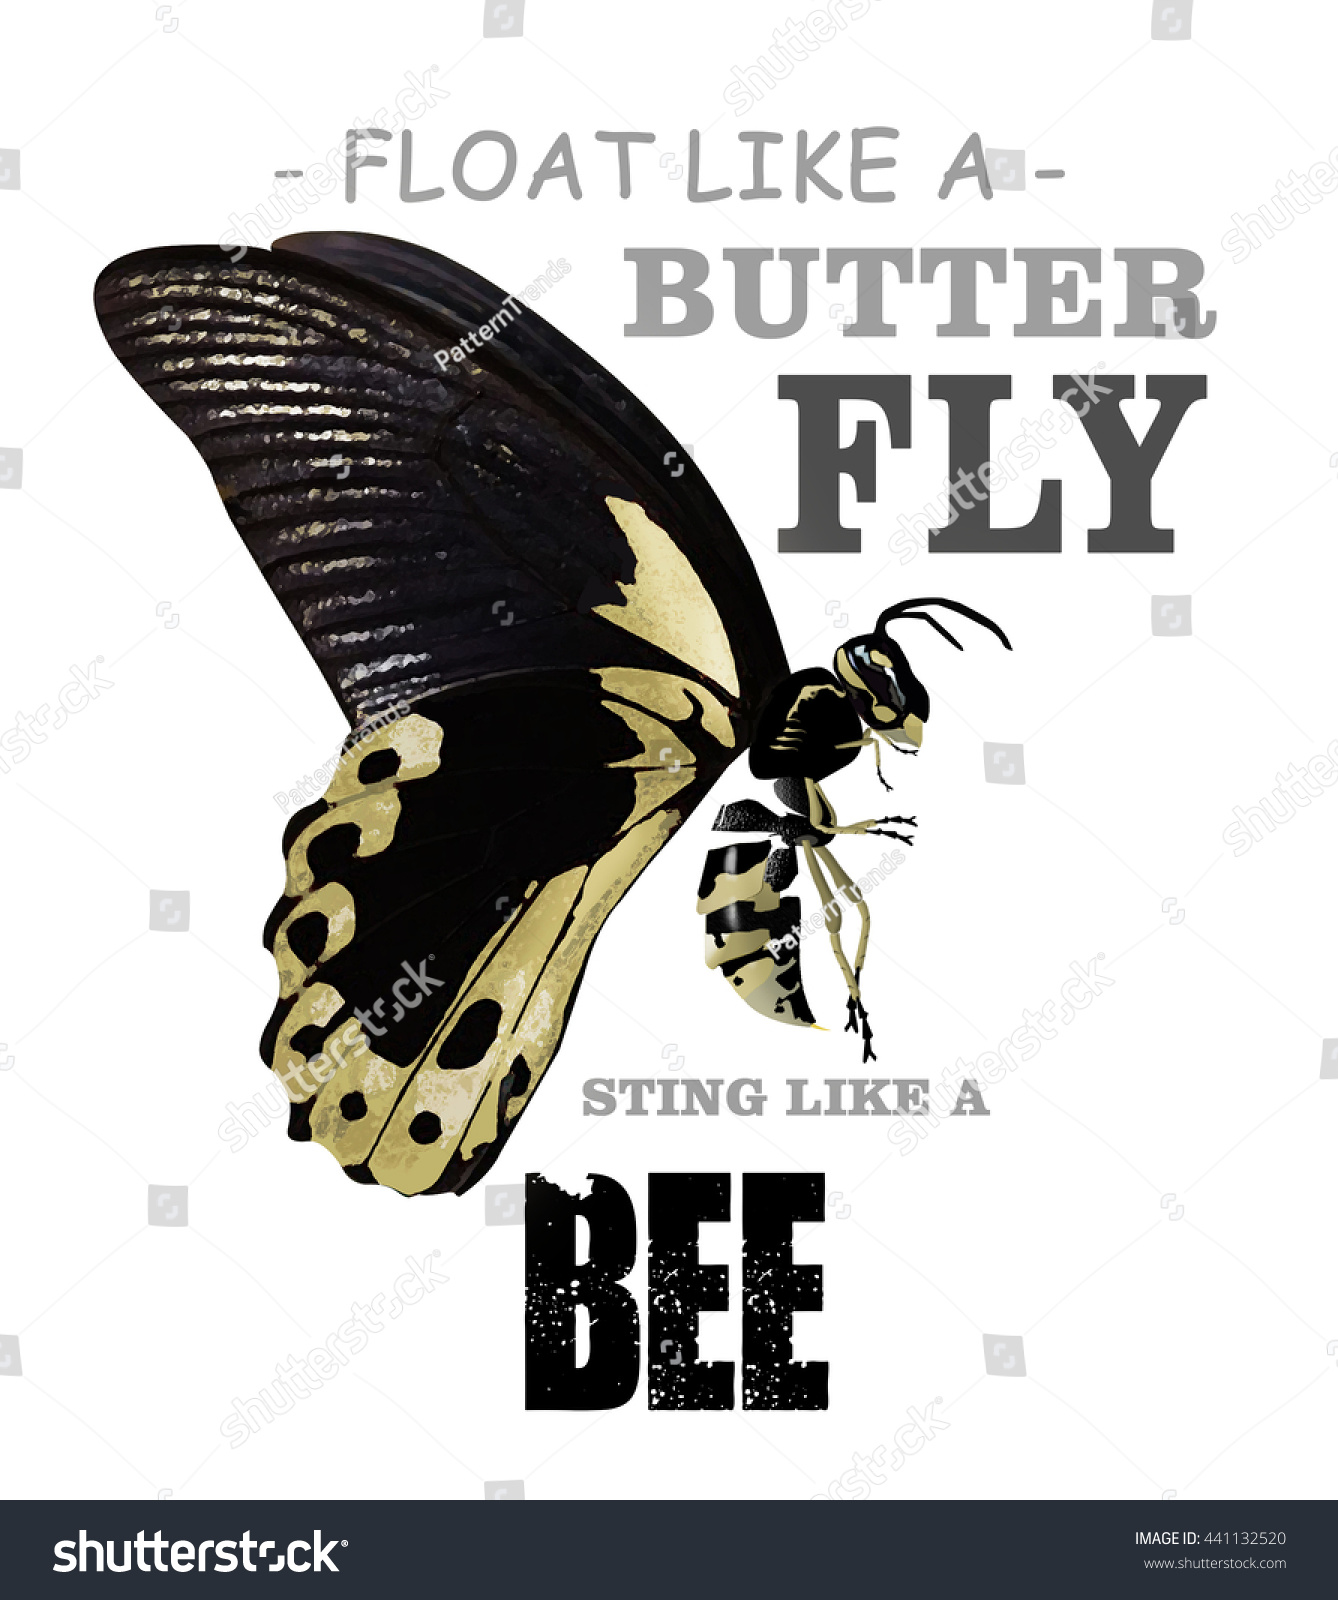 Float like a butterfly sting like a bee